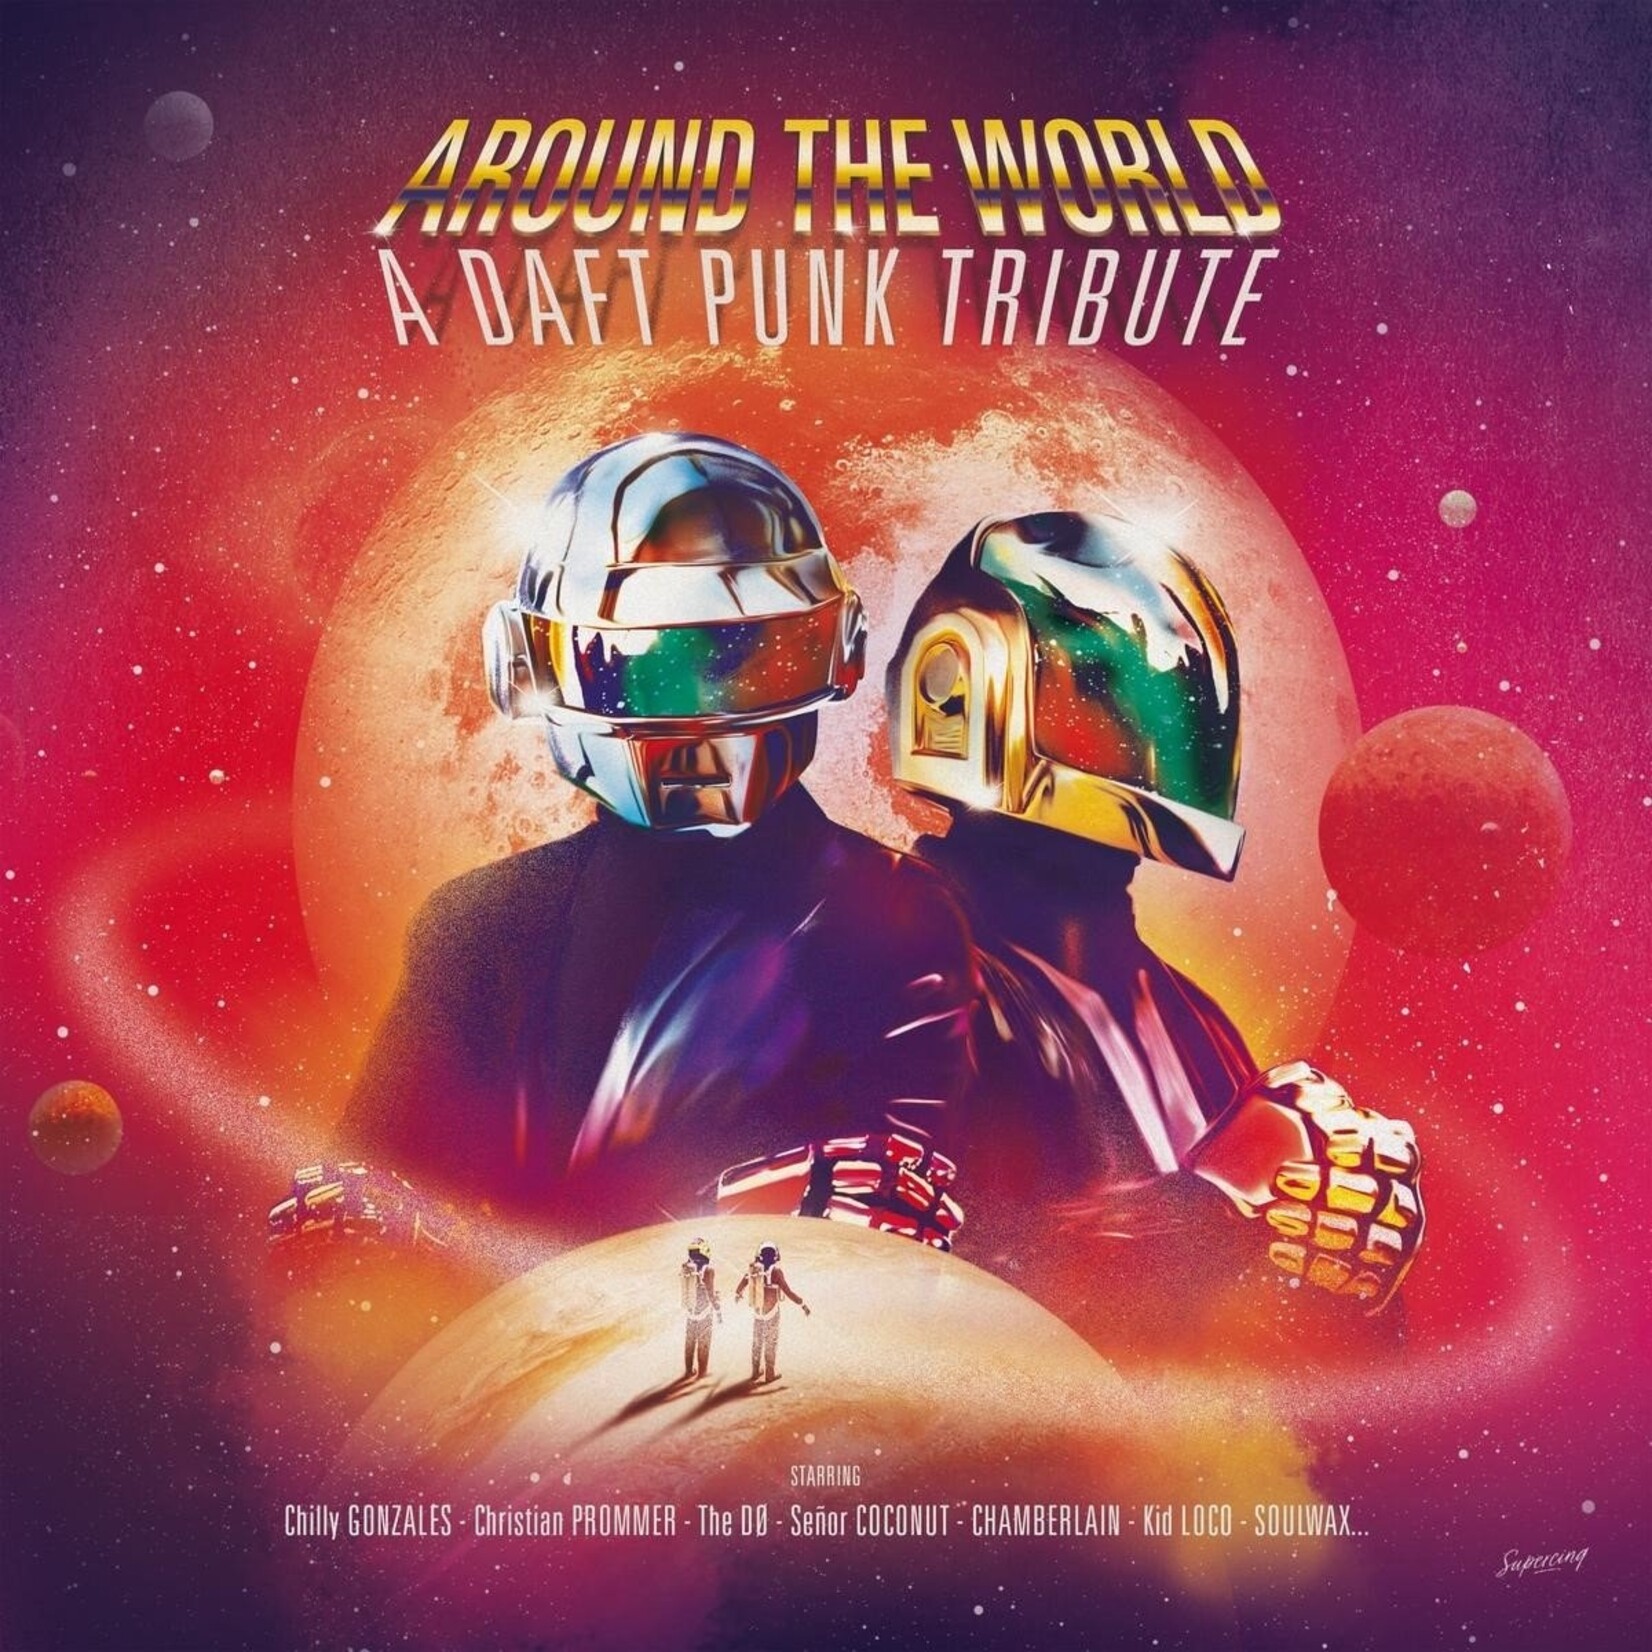 V/A - Around The World - A Daft Punk Tribute